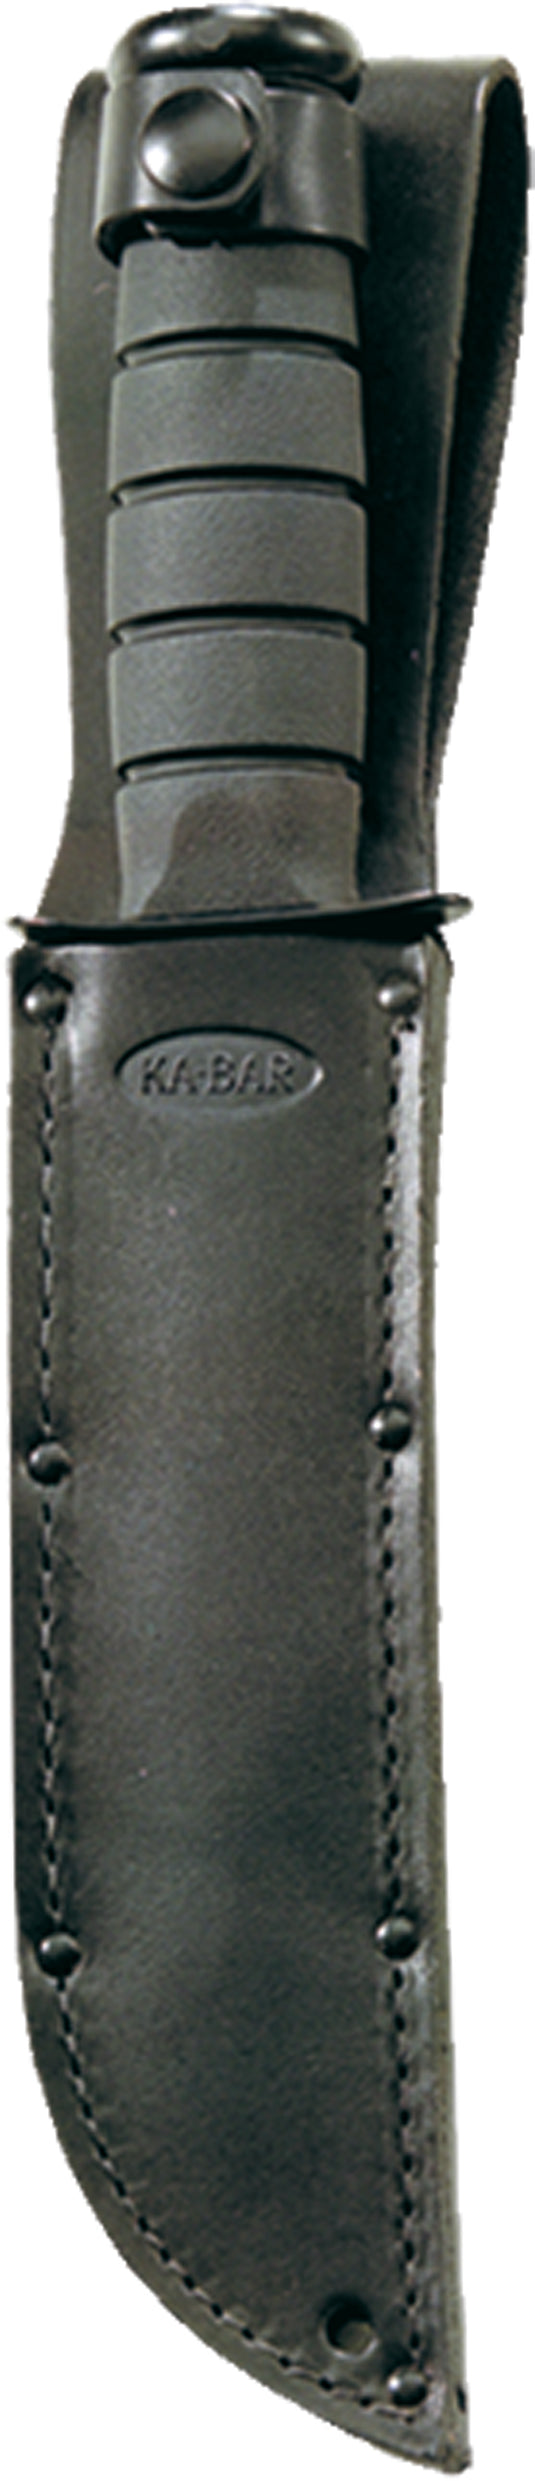 KA-BAR® Full Size Black (1211)